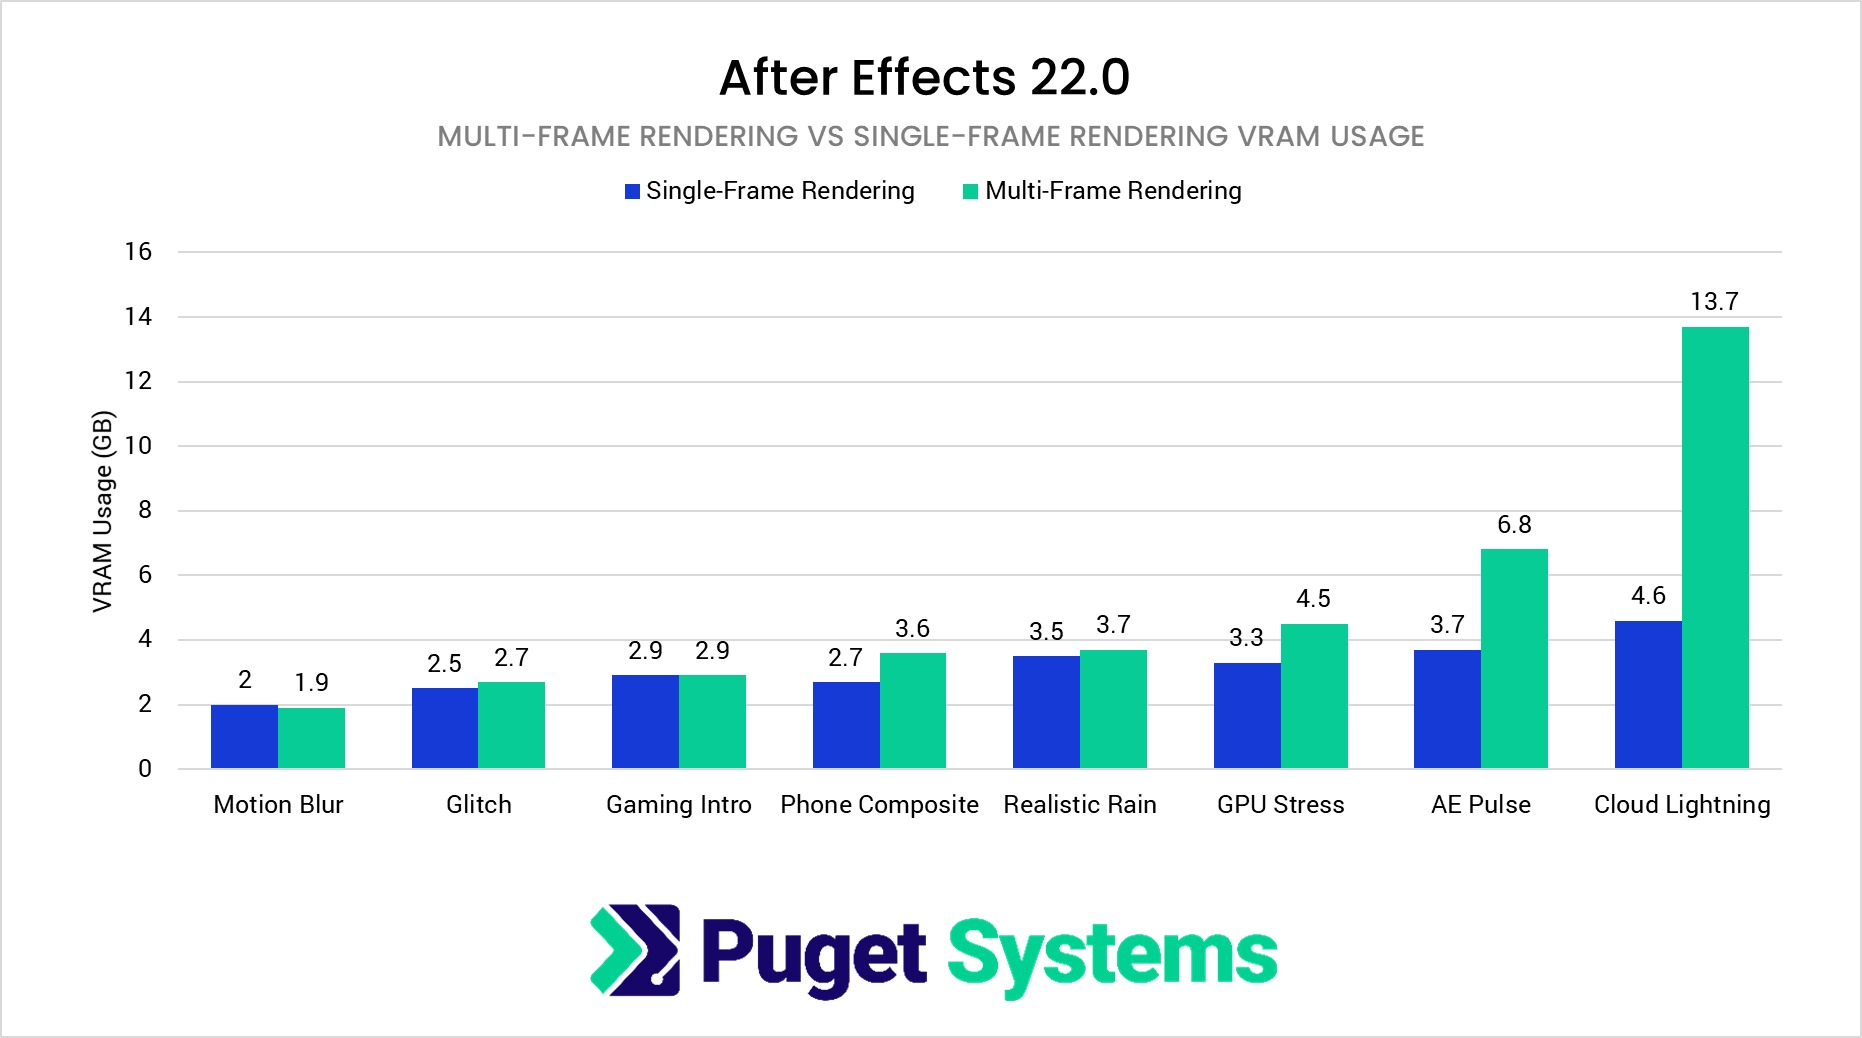 After Effects MFR vs SFR VRAM usage